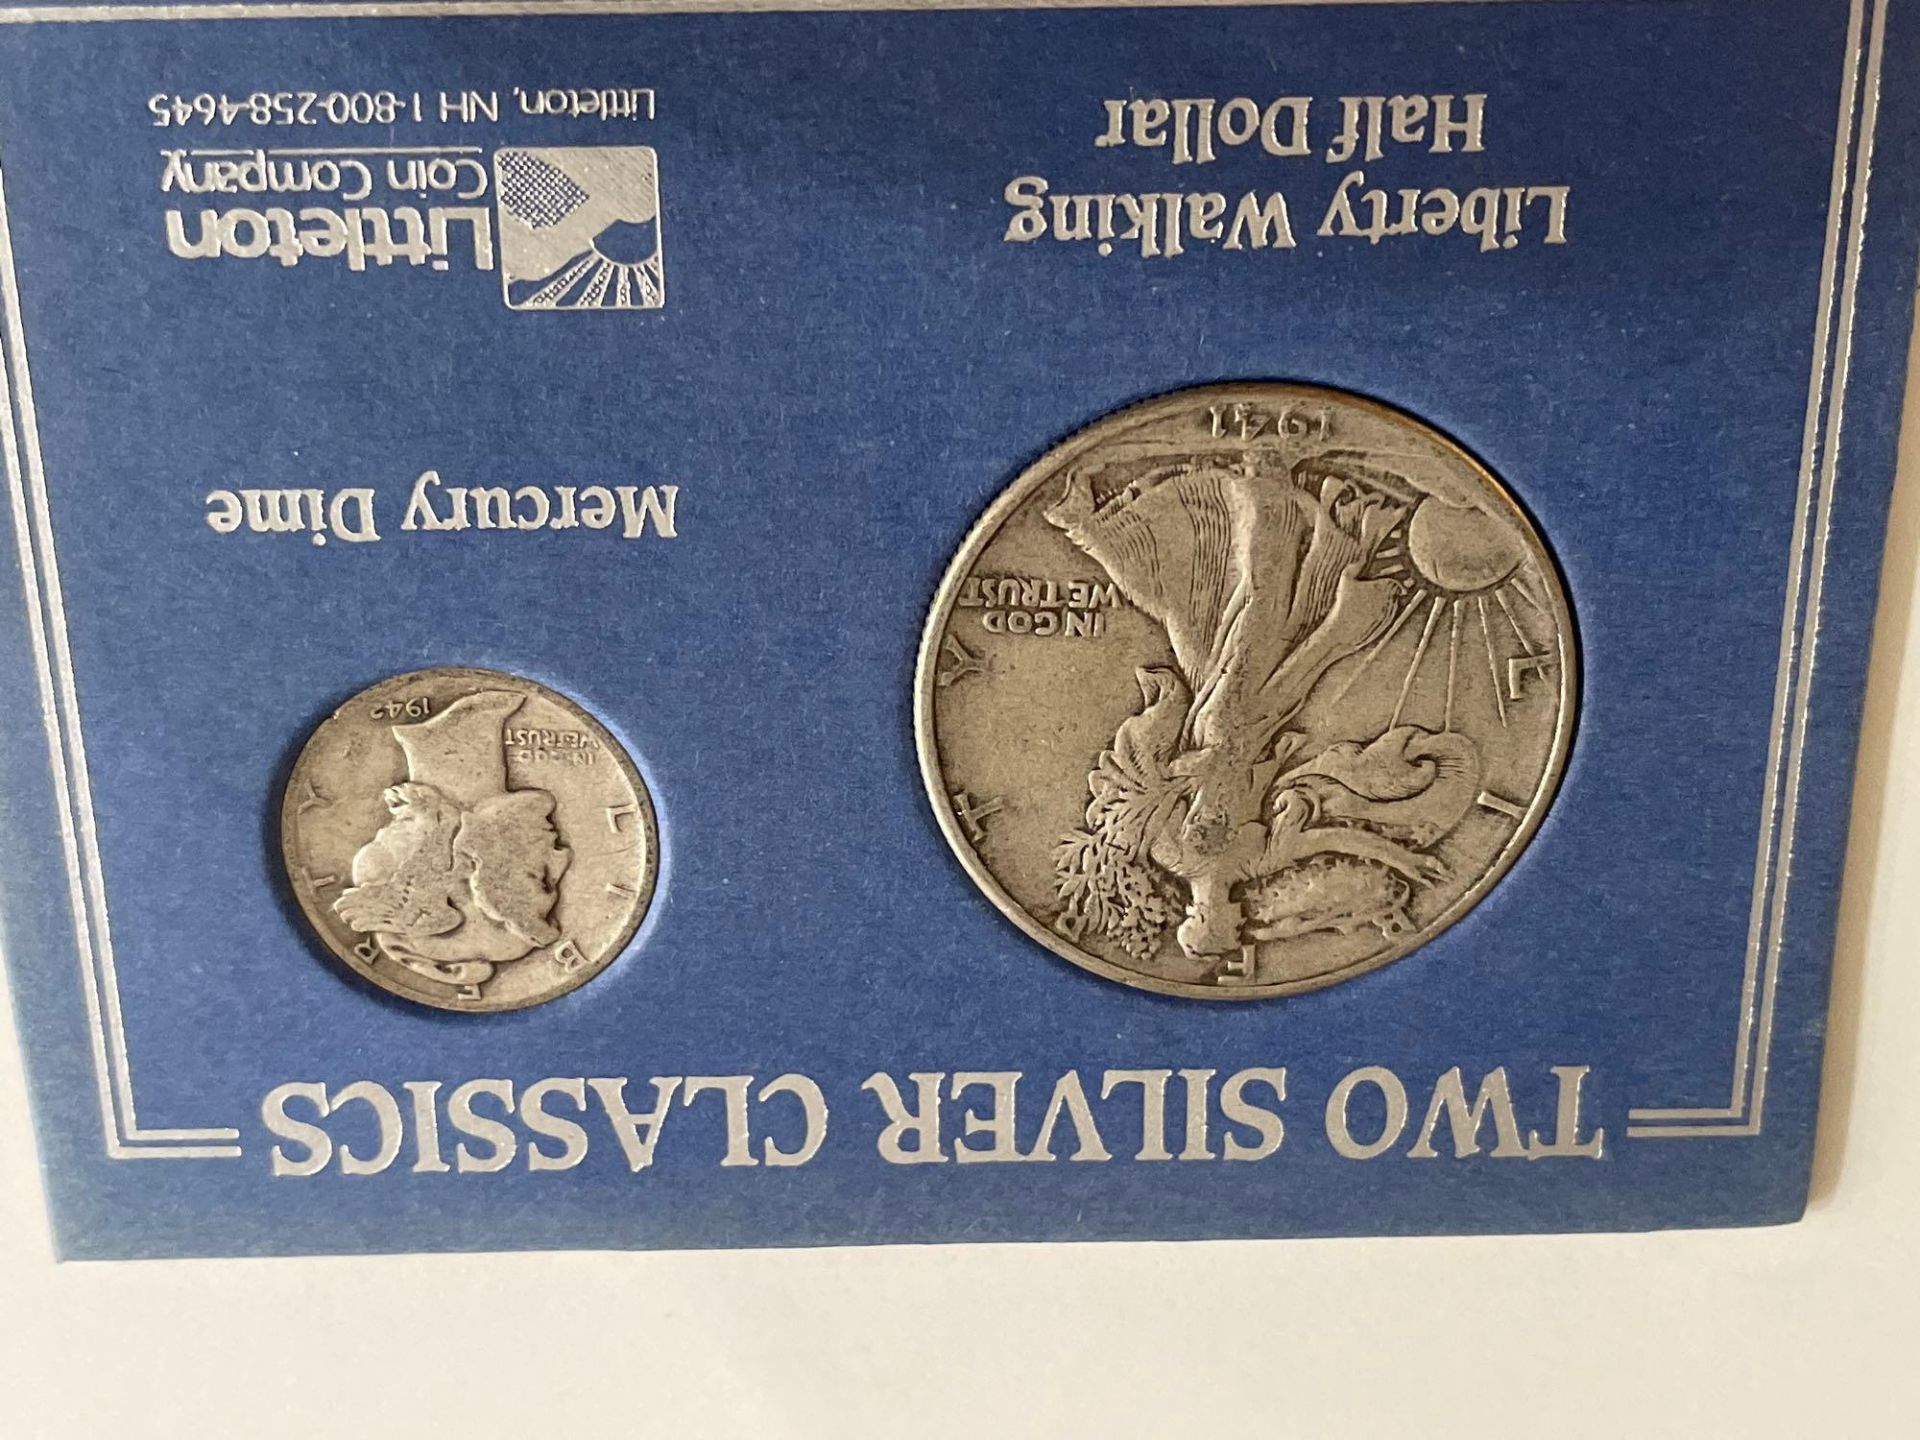 1776-1976 American Revolution Bicentennial, Two Silver Classics: Liberty Walking Half Dollar & Mercu - Image 6 of 8